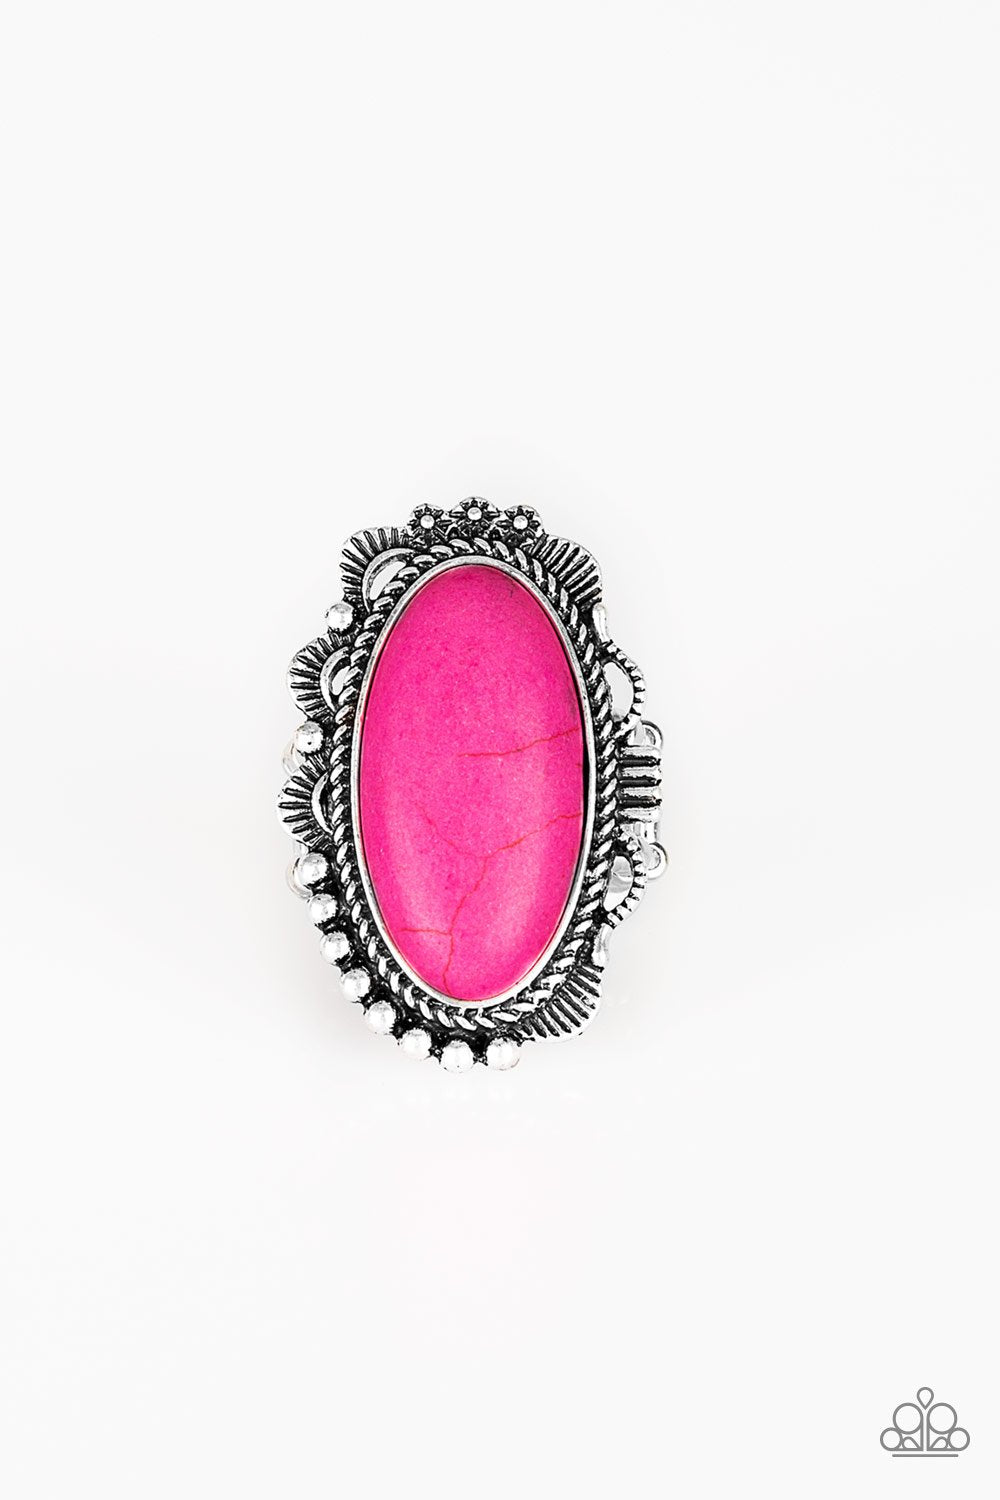 Open Range - Pink Ring freeshipping - JewLz4u Gemstone Gallery